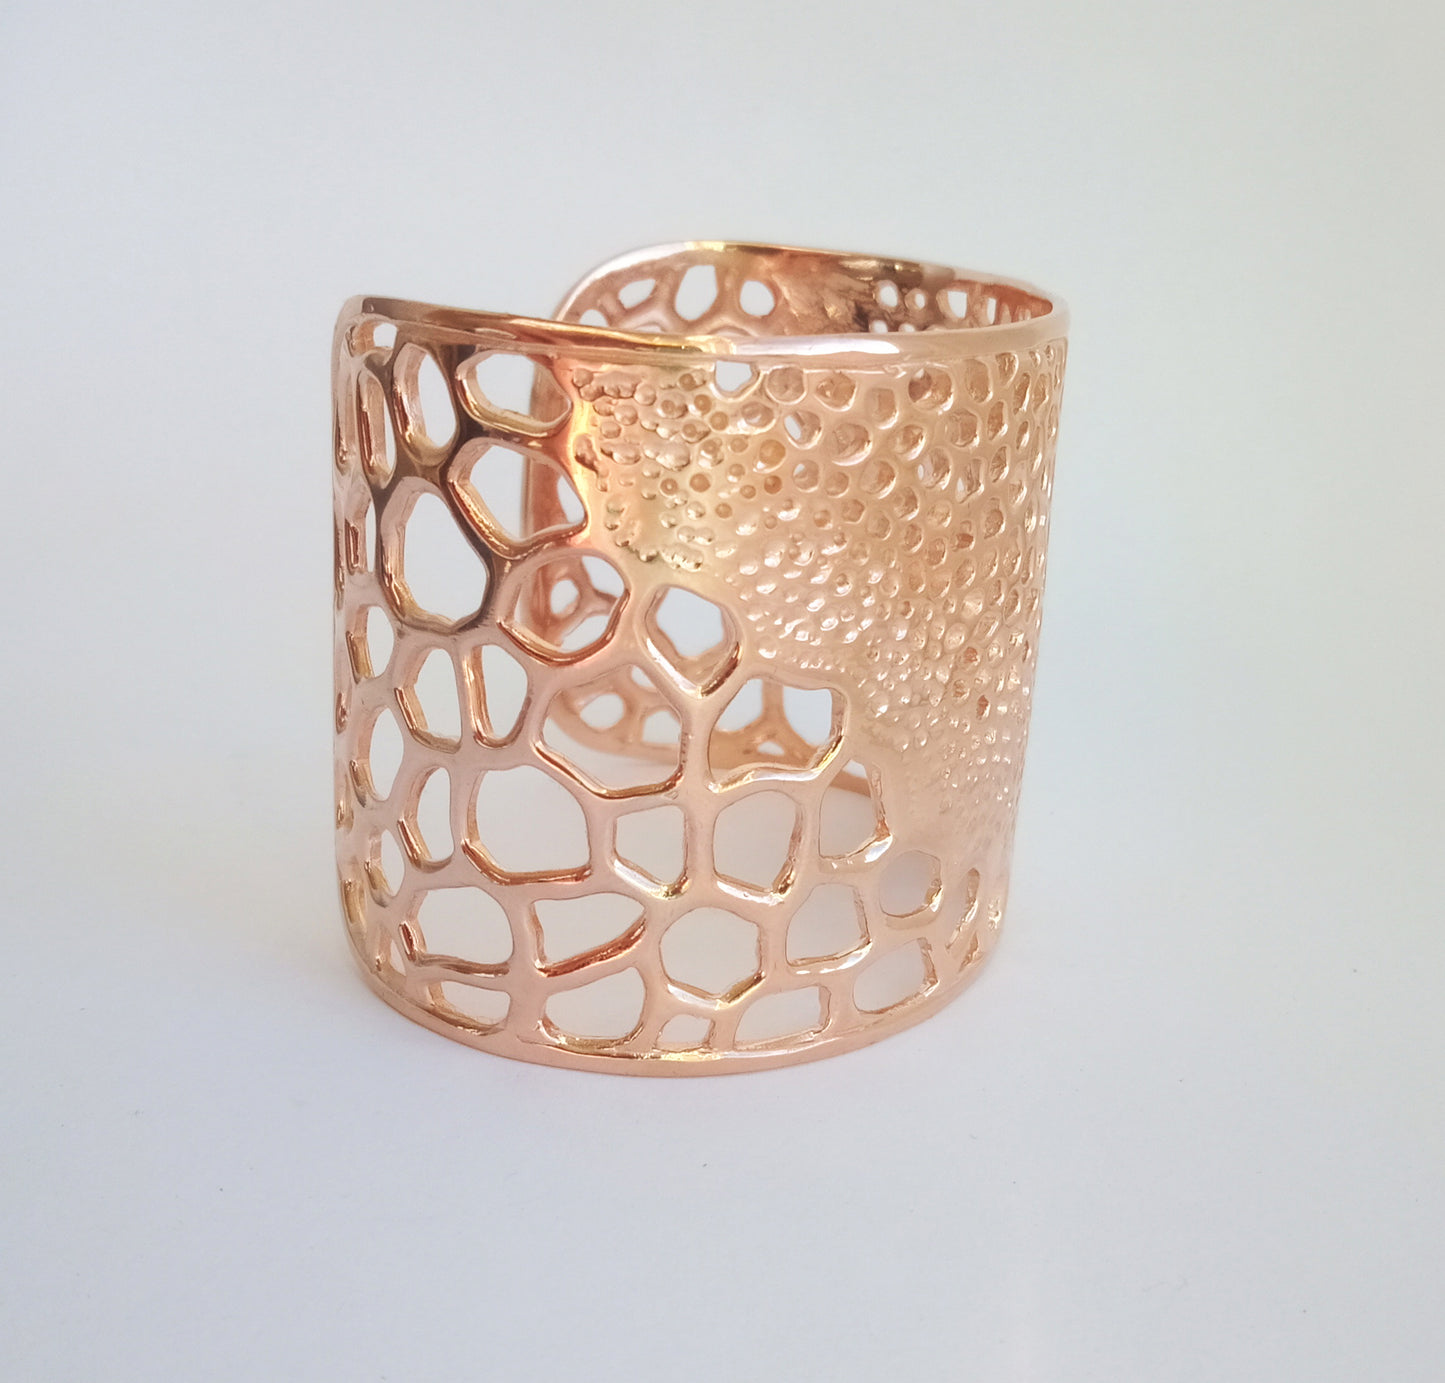 Labyrinth Rose Gold Cuff Bracelet